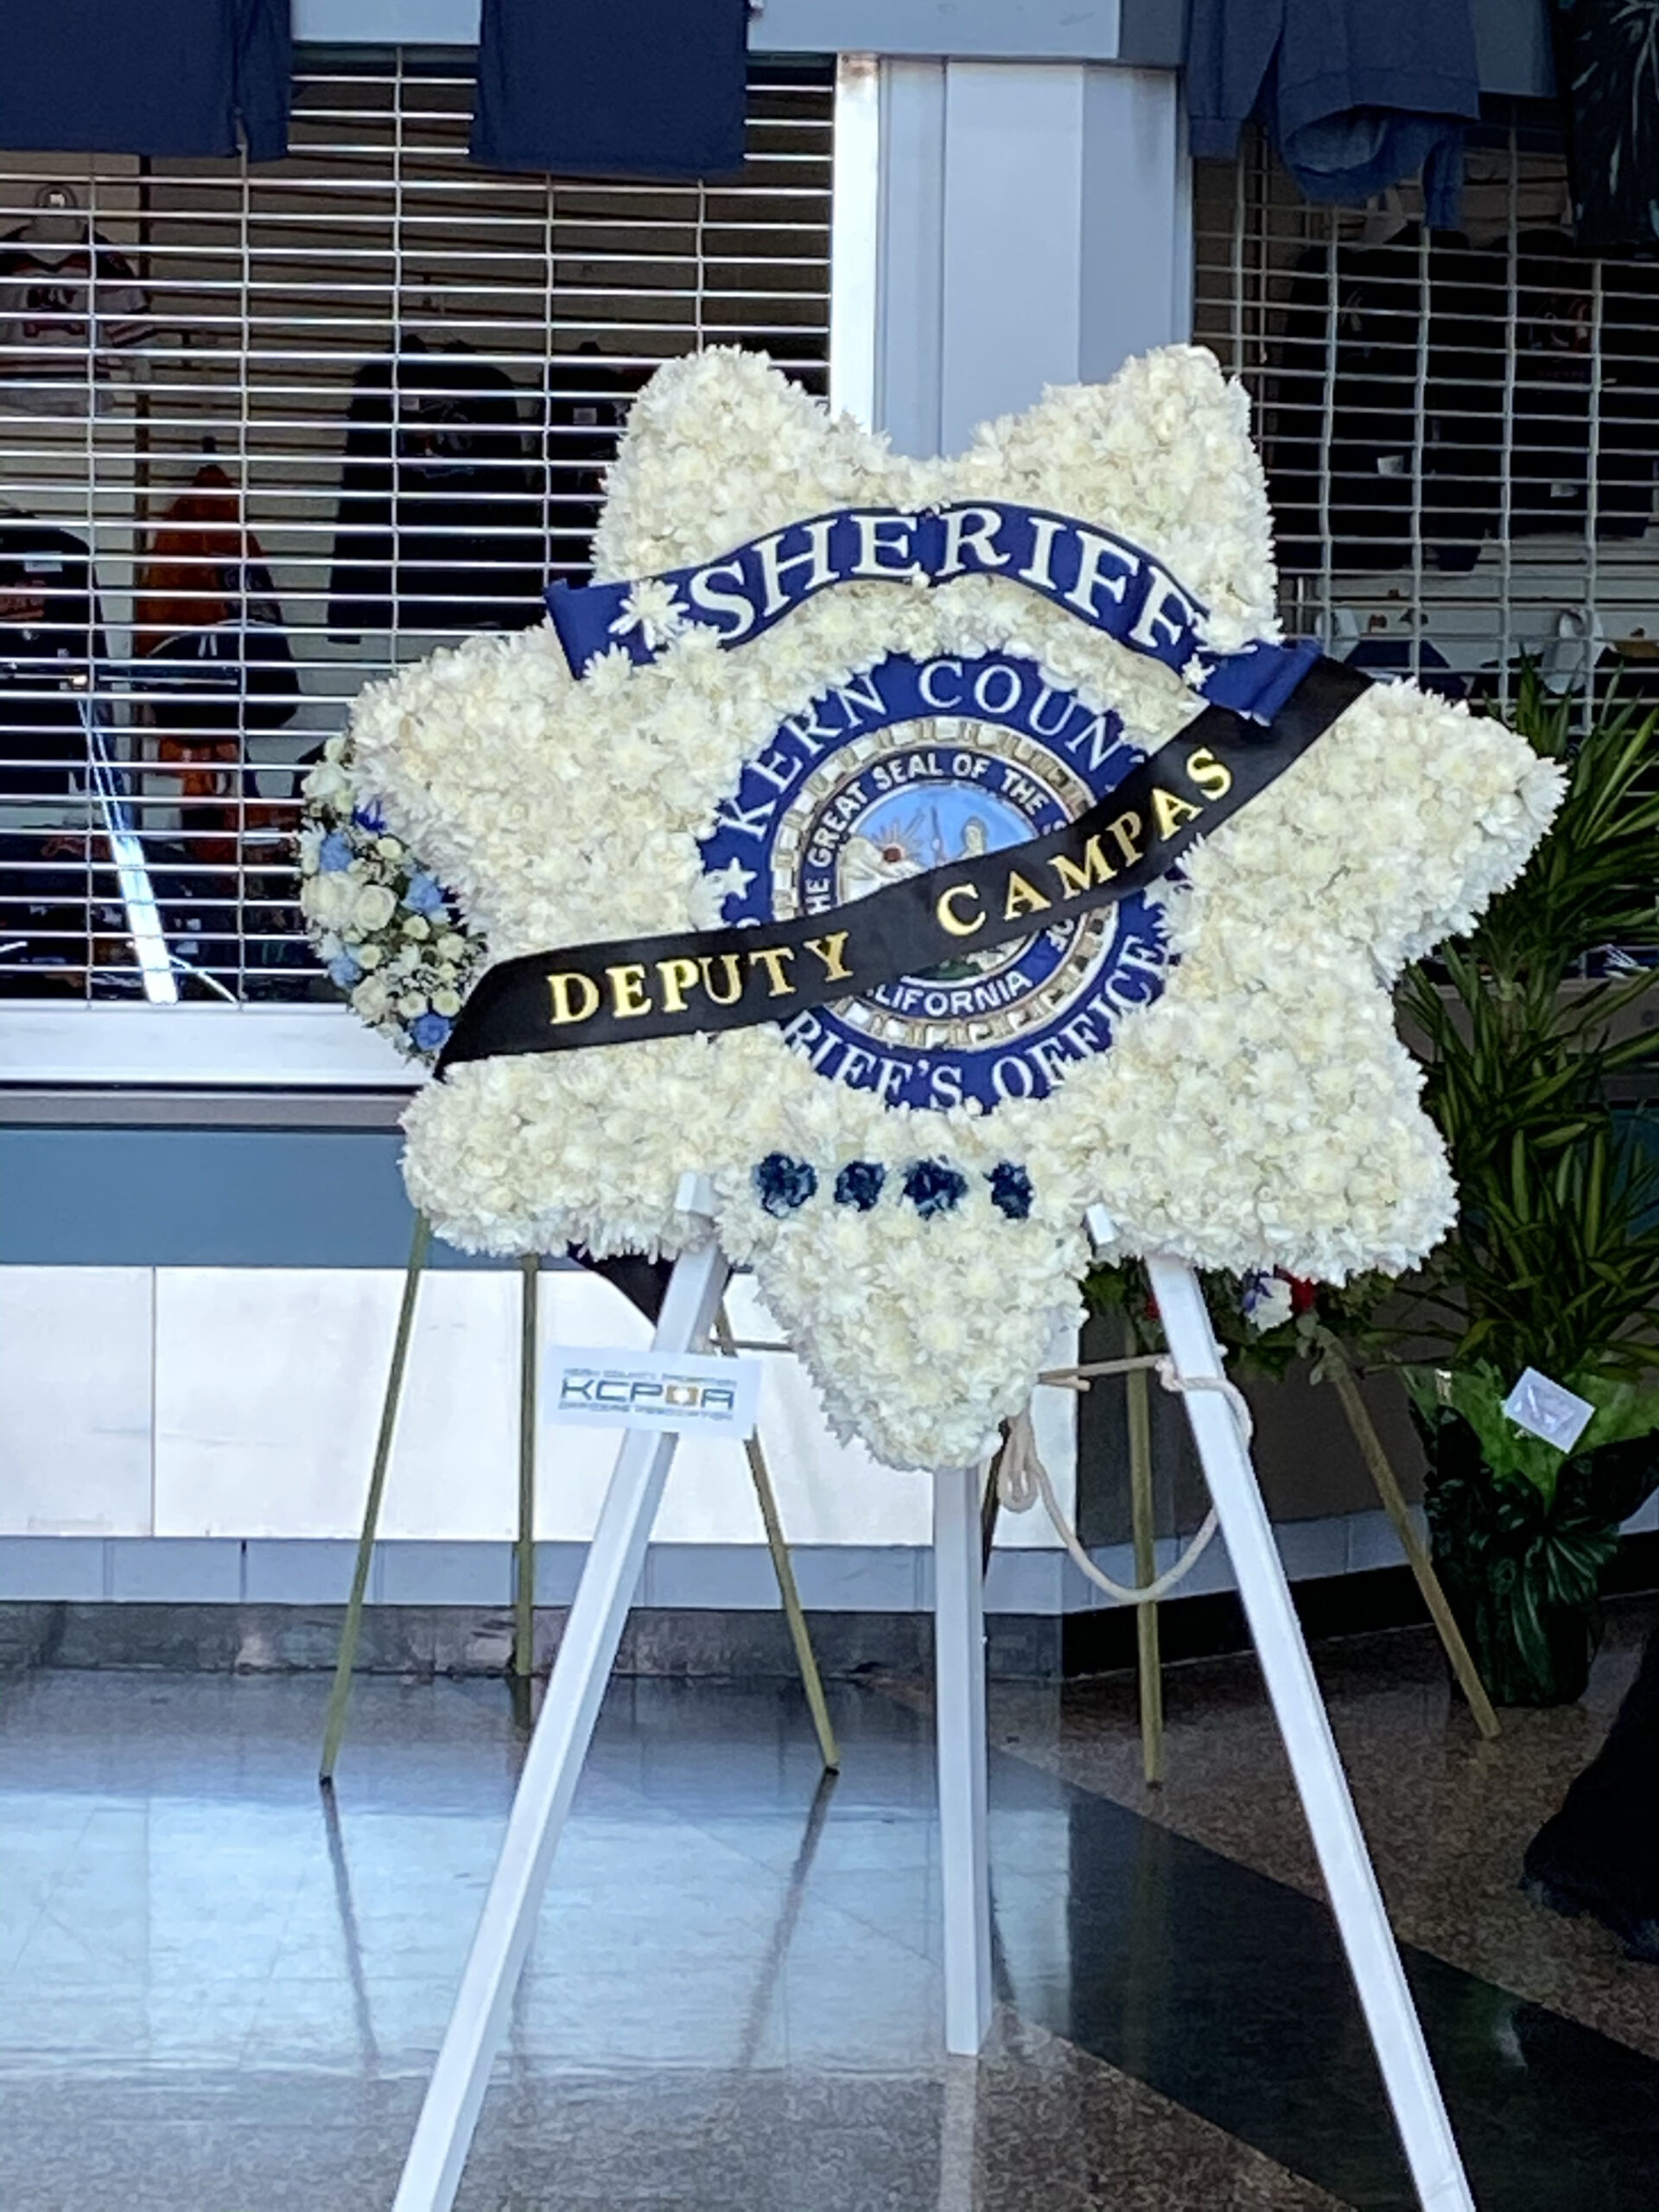 Officer Campas Memorial